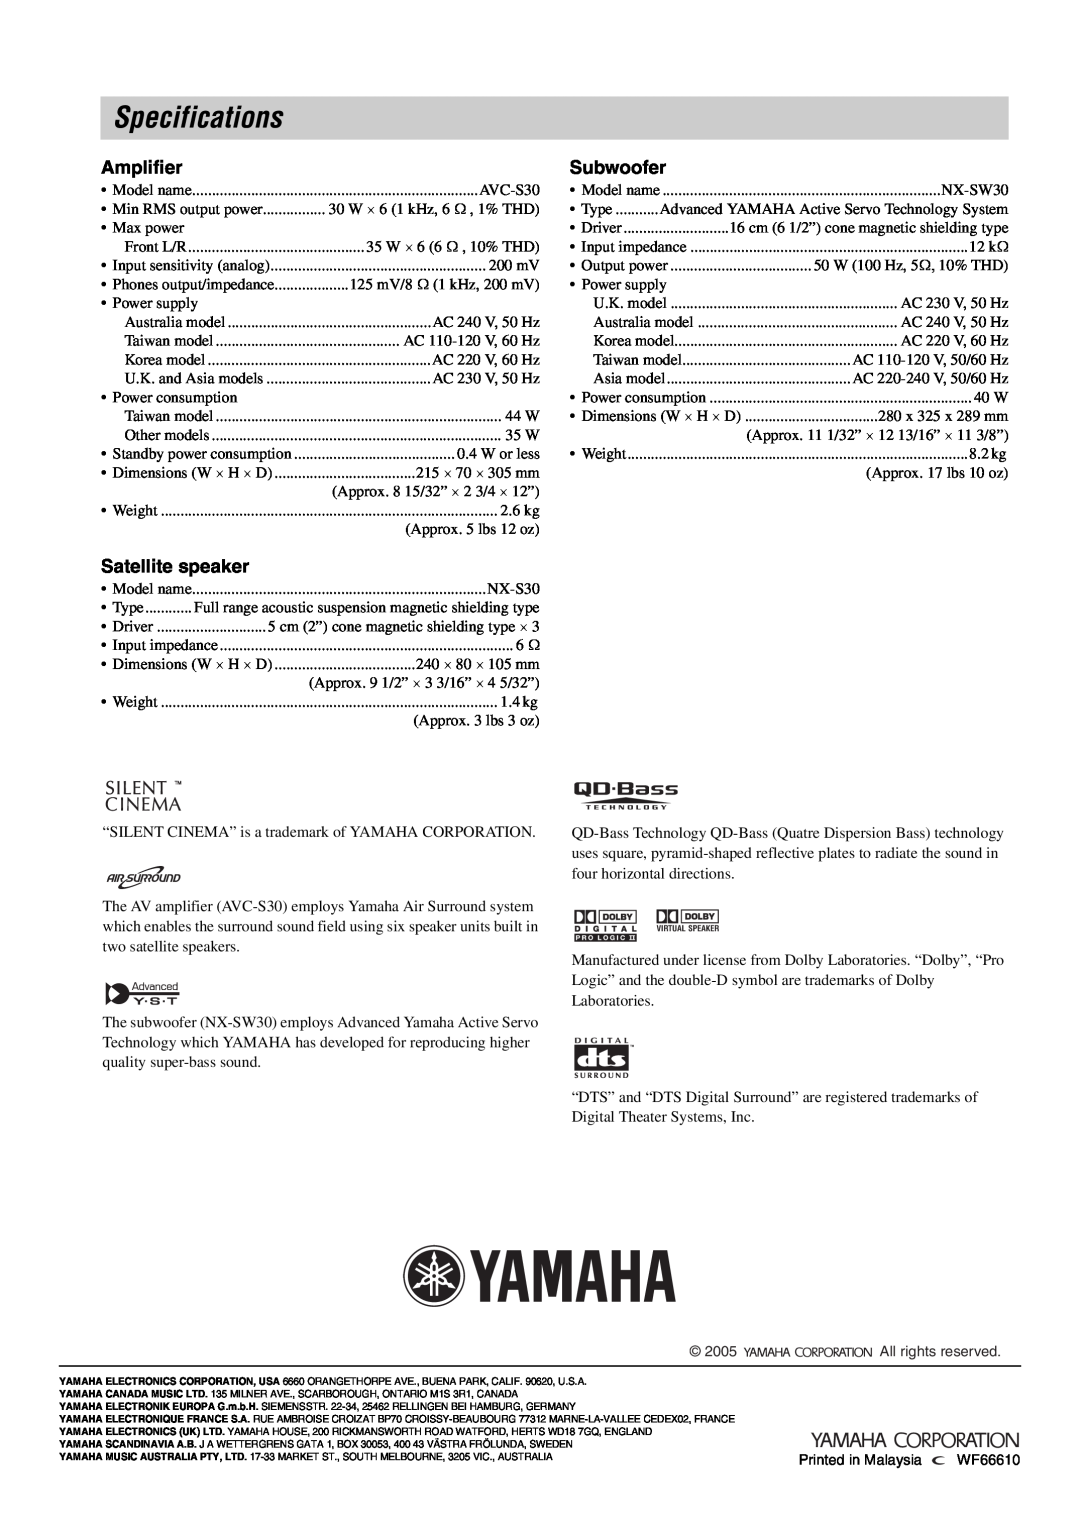 Yamaha AVX-S30 owner manual Specifications, Amplifier, Subwoofer, Satellite speaker 